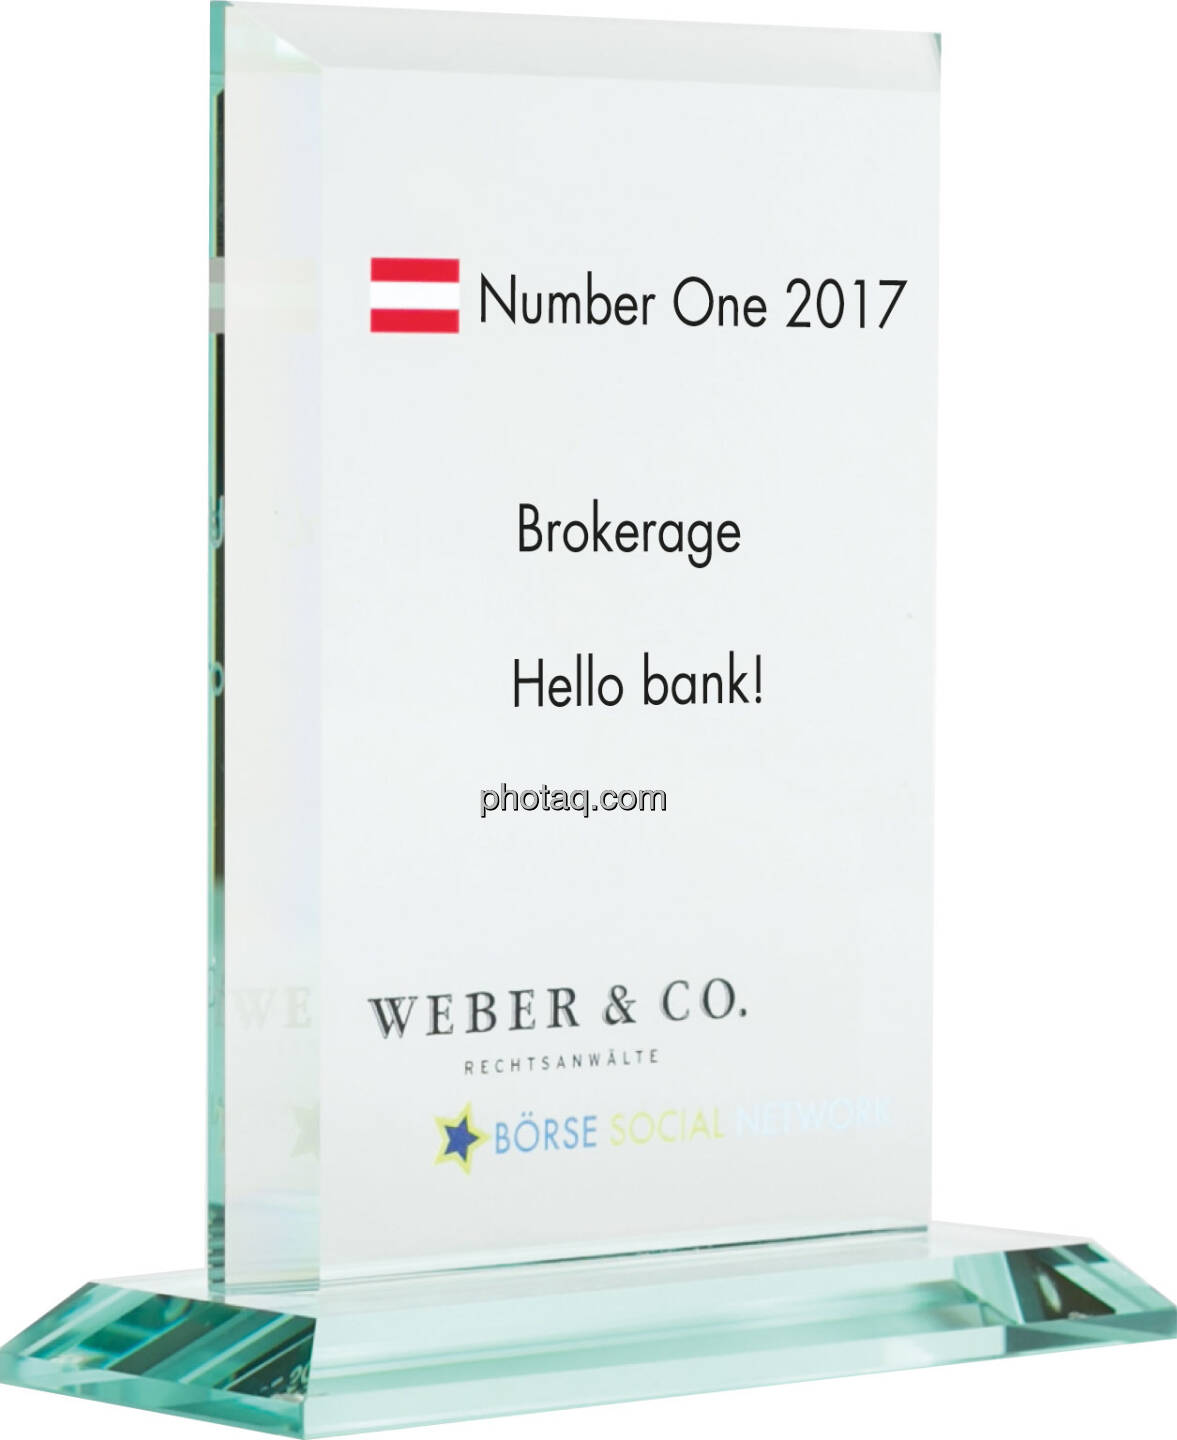 Number One Awards 2017 - Brokerage - Hello bank!